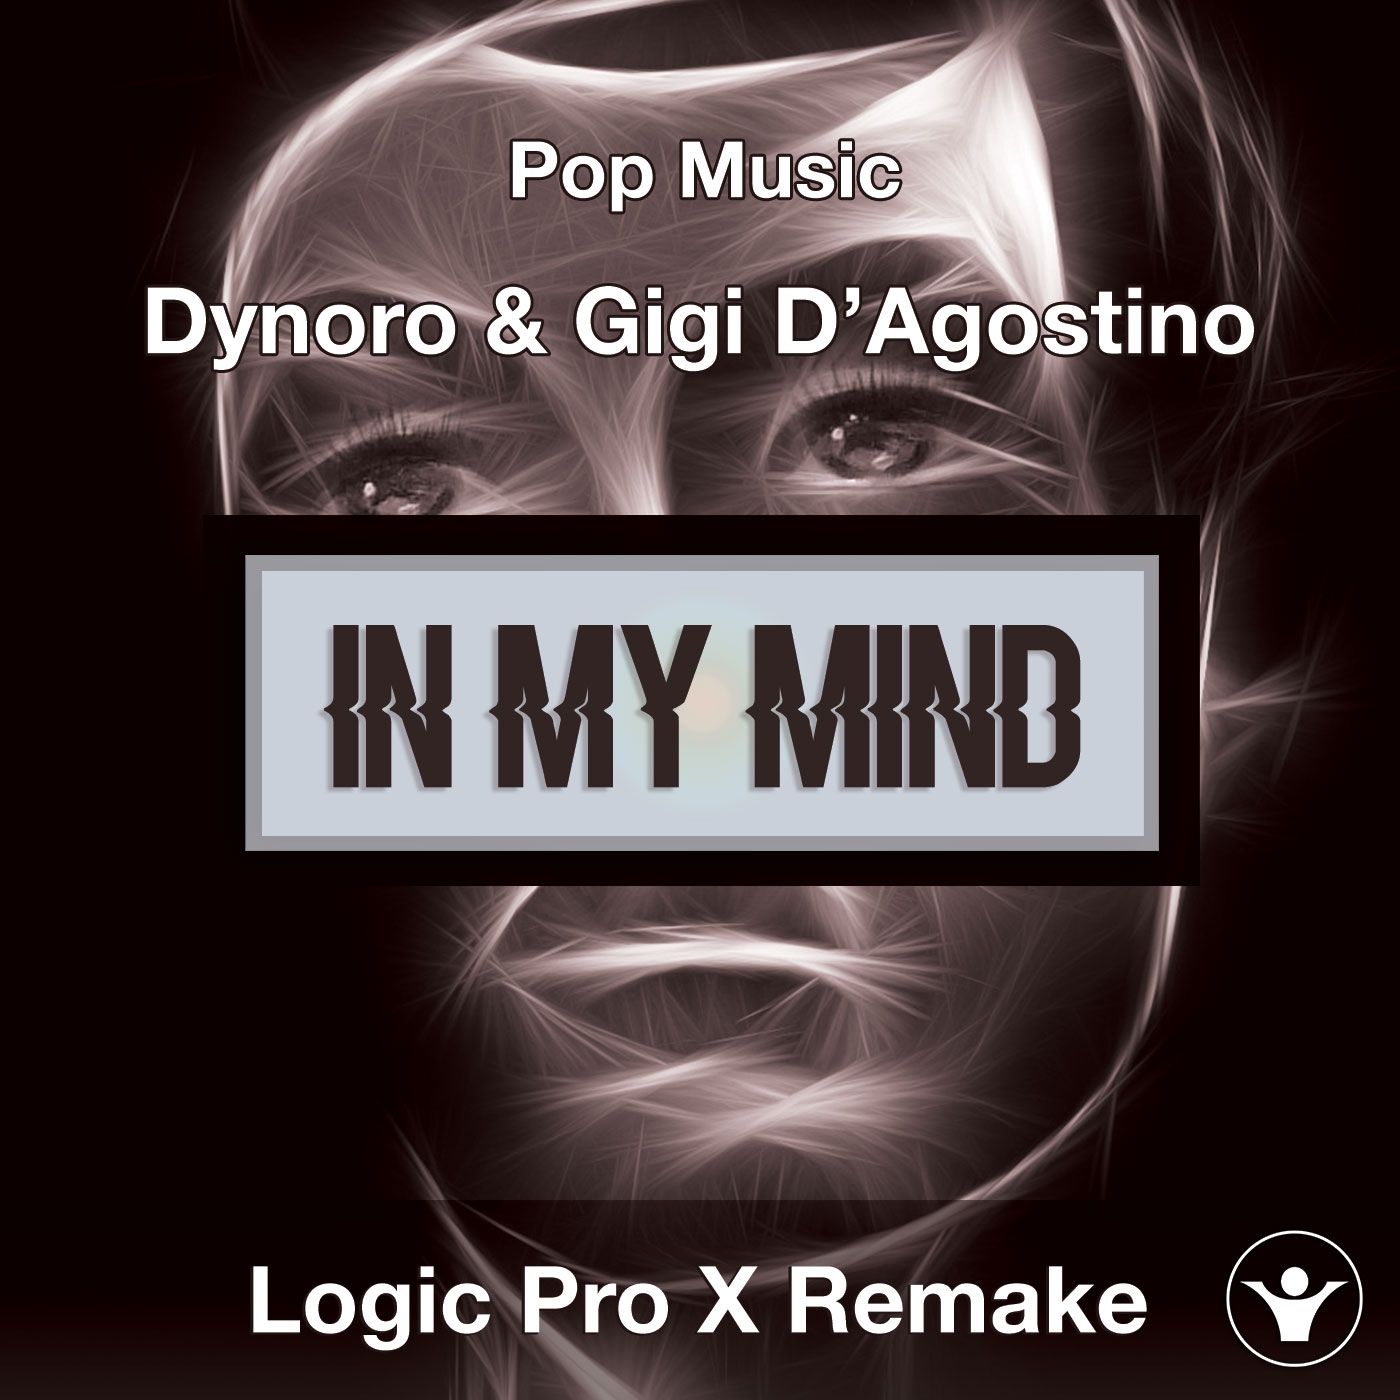 Access In My Mind (Dynoro & Gigi D'Agostino) Logic Pro X Remake Templa